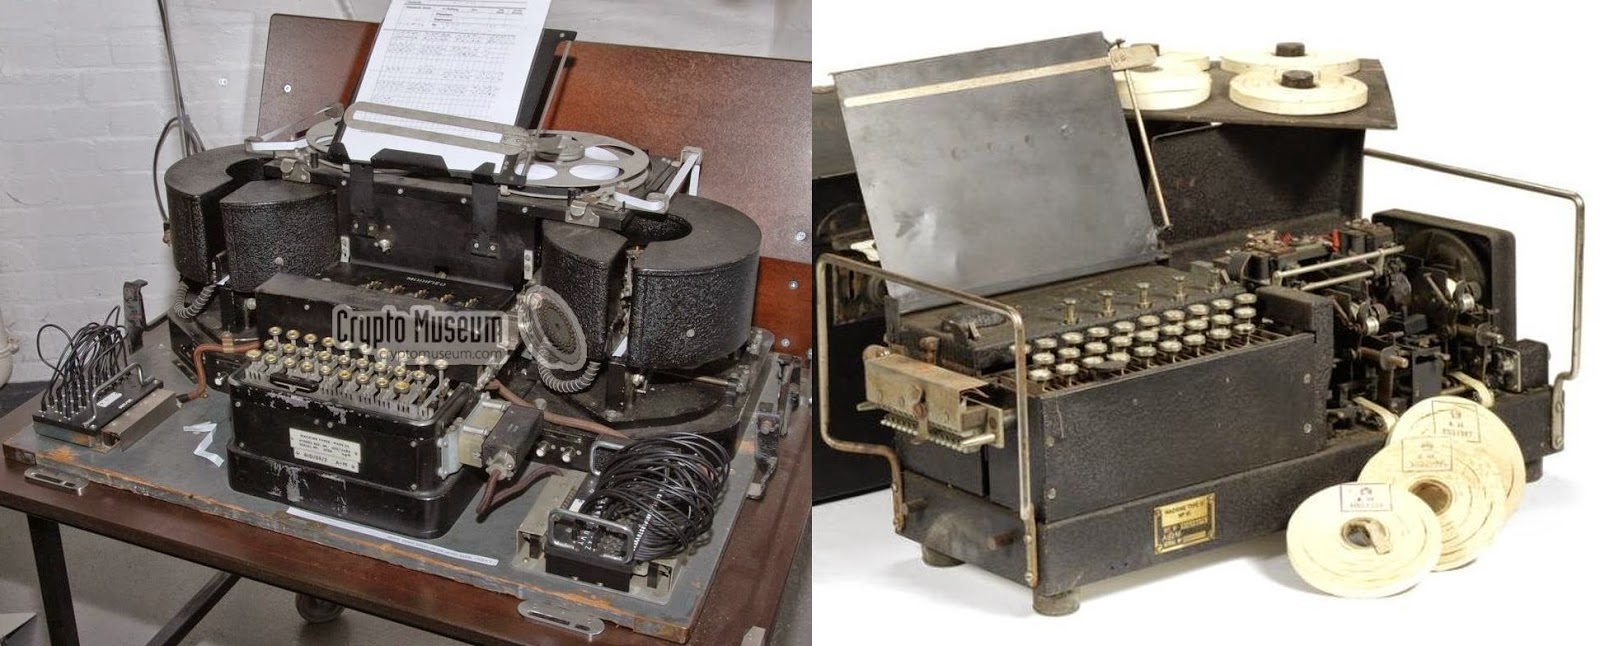 Christos military and intelligence corner: The British Typex cipher machine